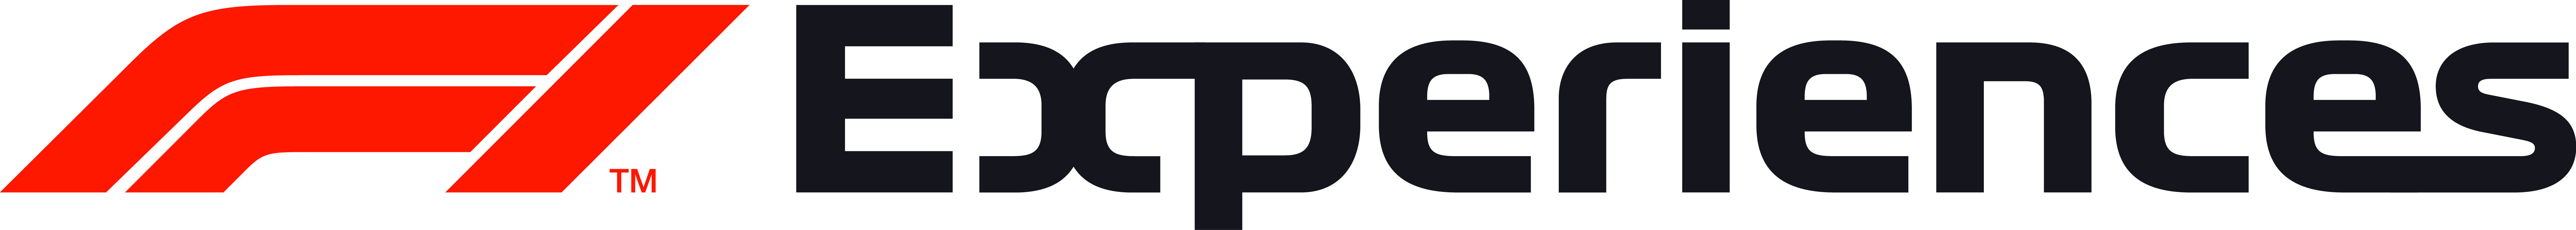 f1 experiences logo | MOTOSPORTS TRAVEL